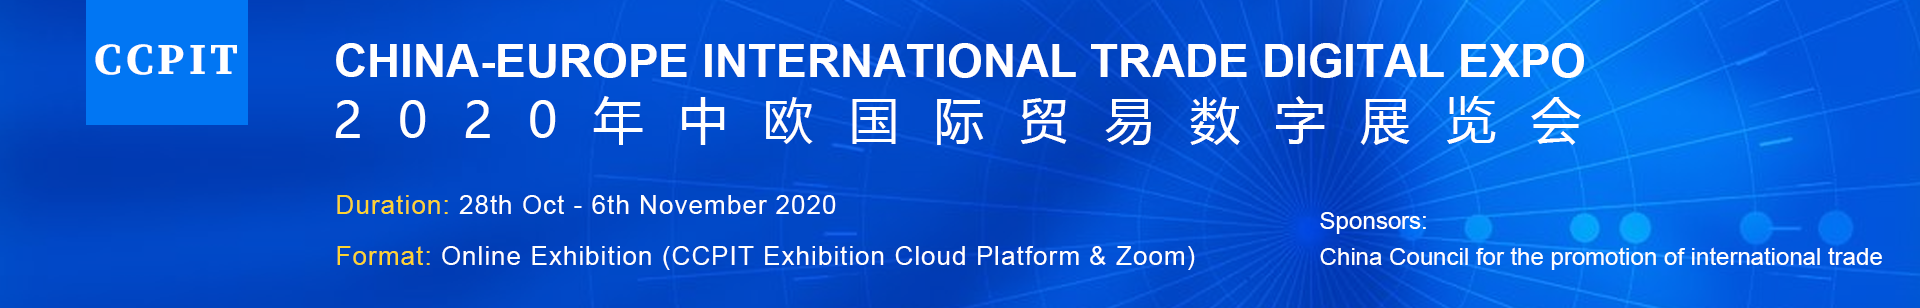 China-Europe International Trade Digital Expo